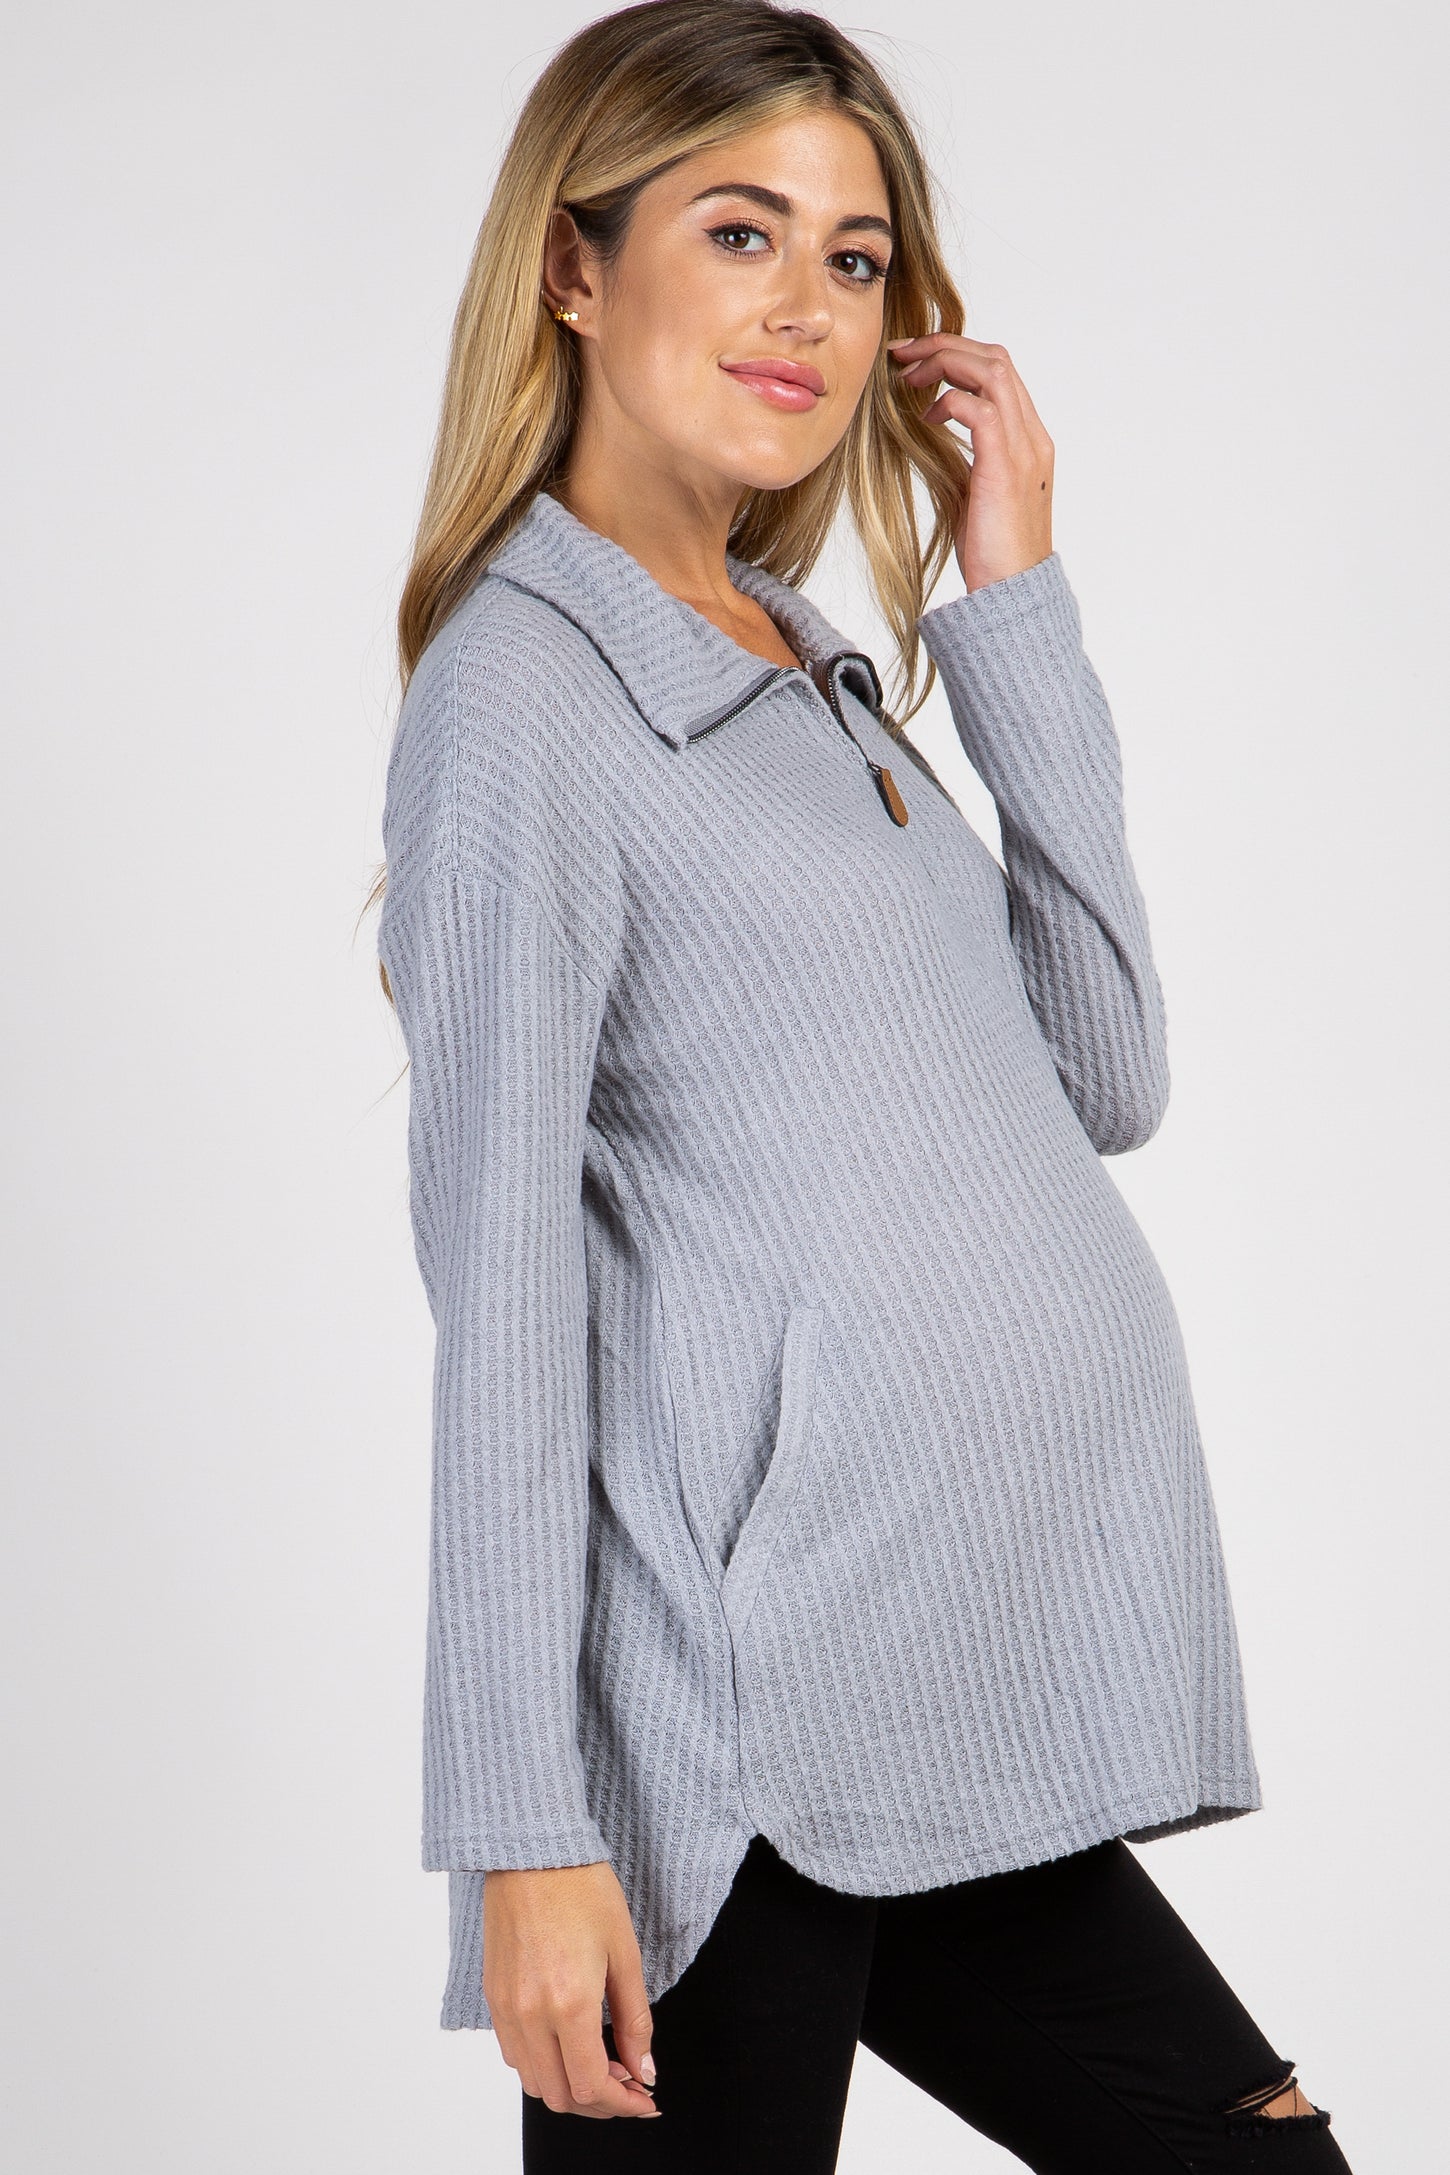 Silver Grey Half Zipper Knit Maternity Sweater– PinkBlush